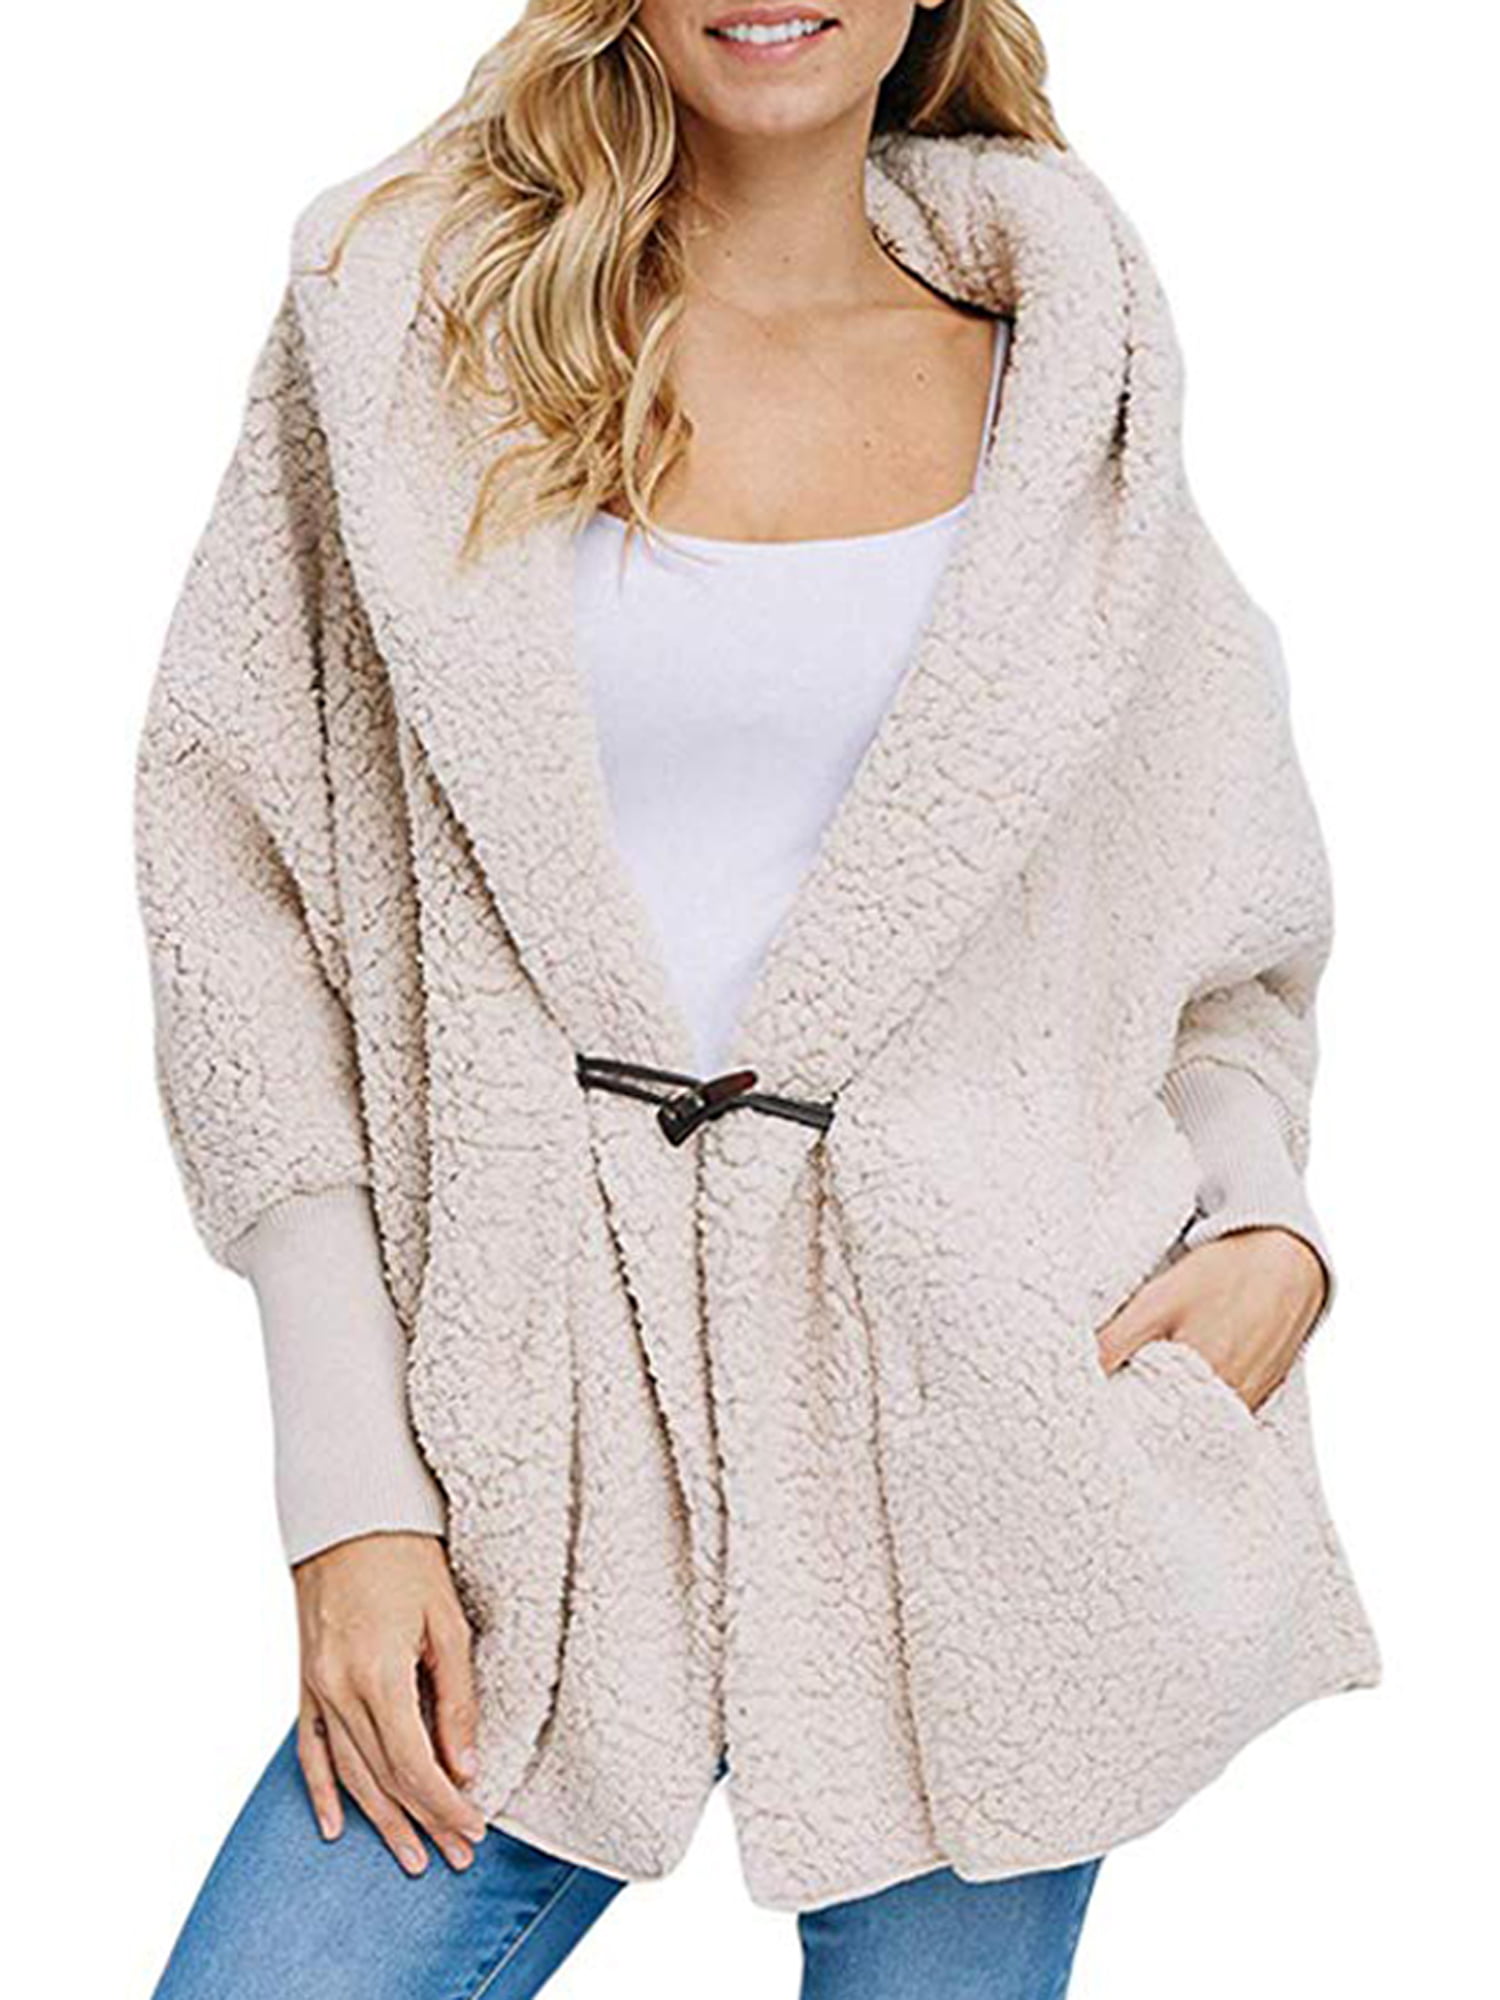 Lallc - Women's Casual Loose Hooded Coats Fluffy Fleece Cardigans ...